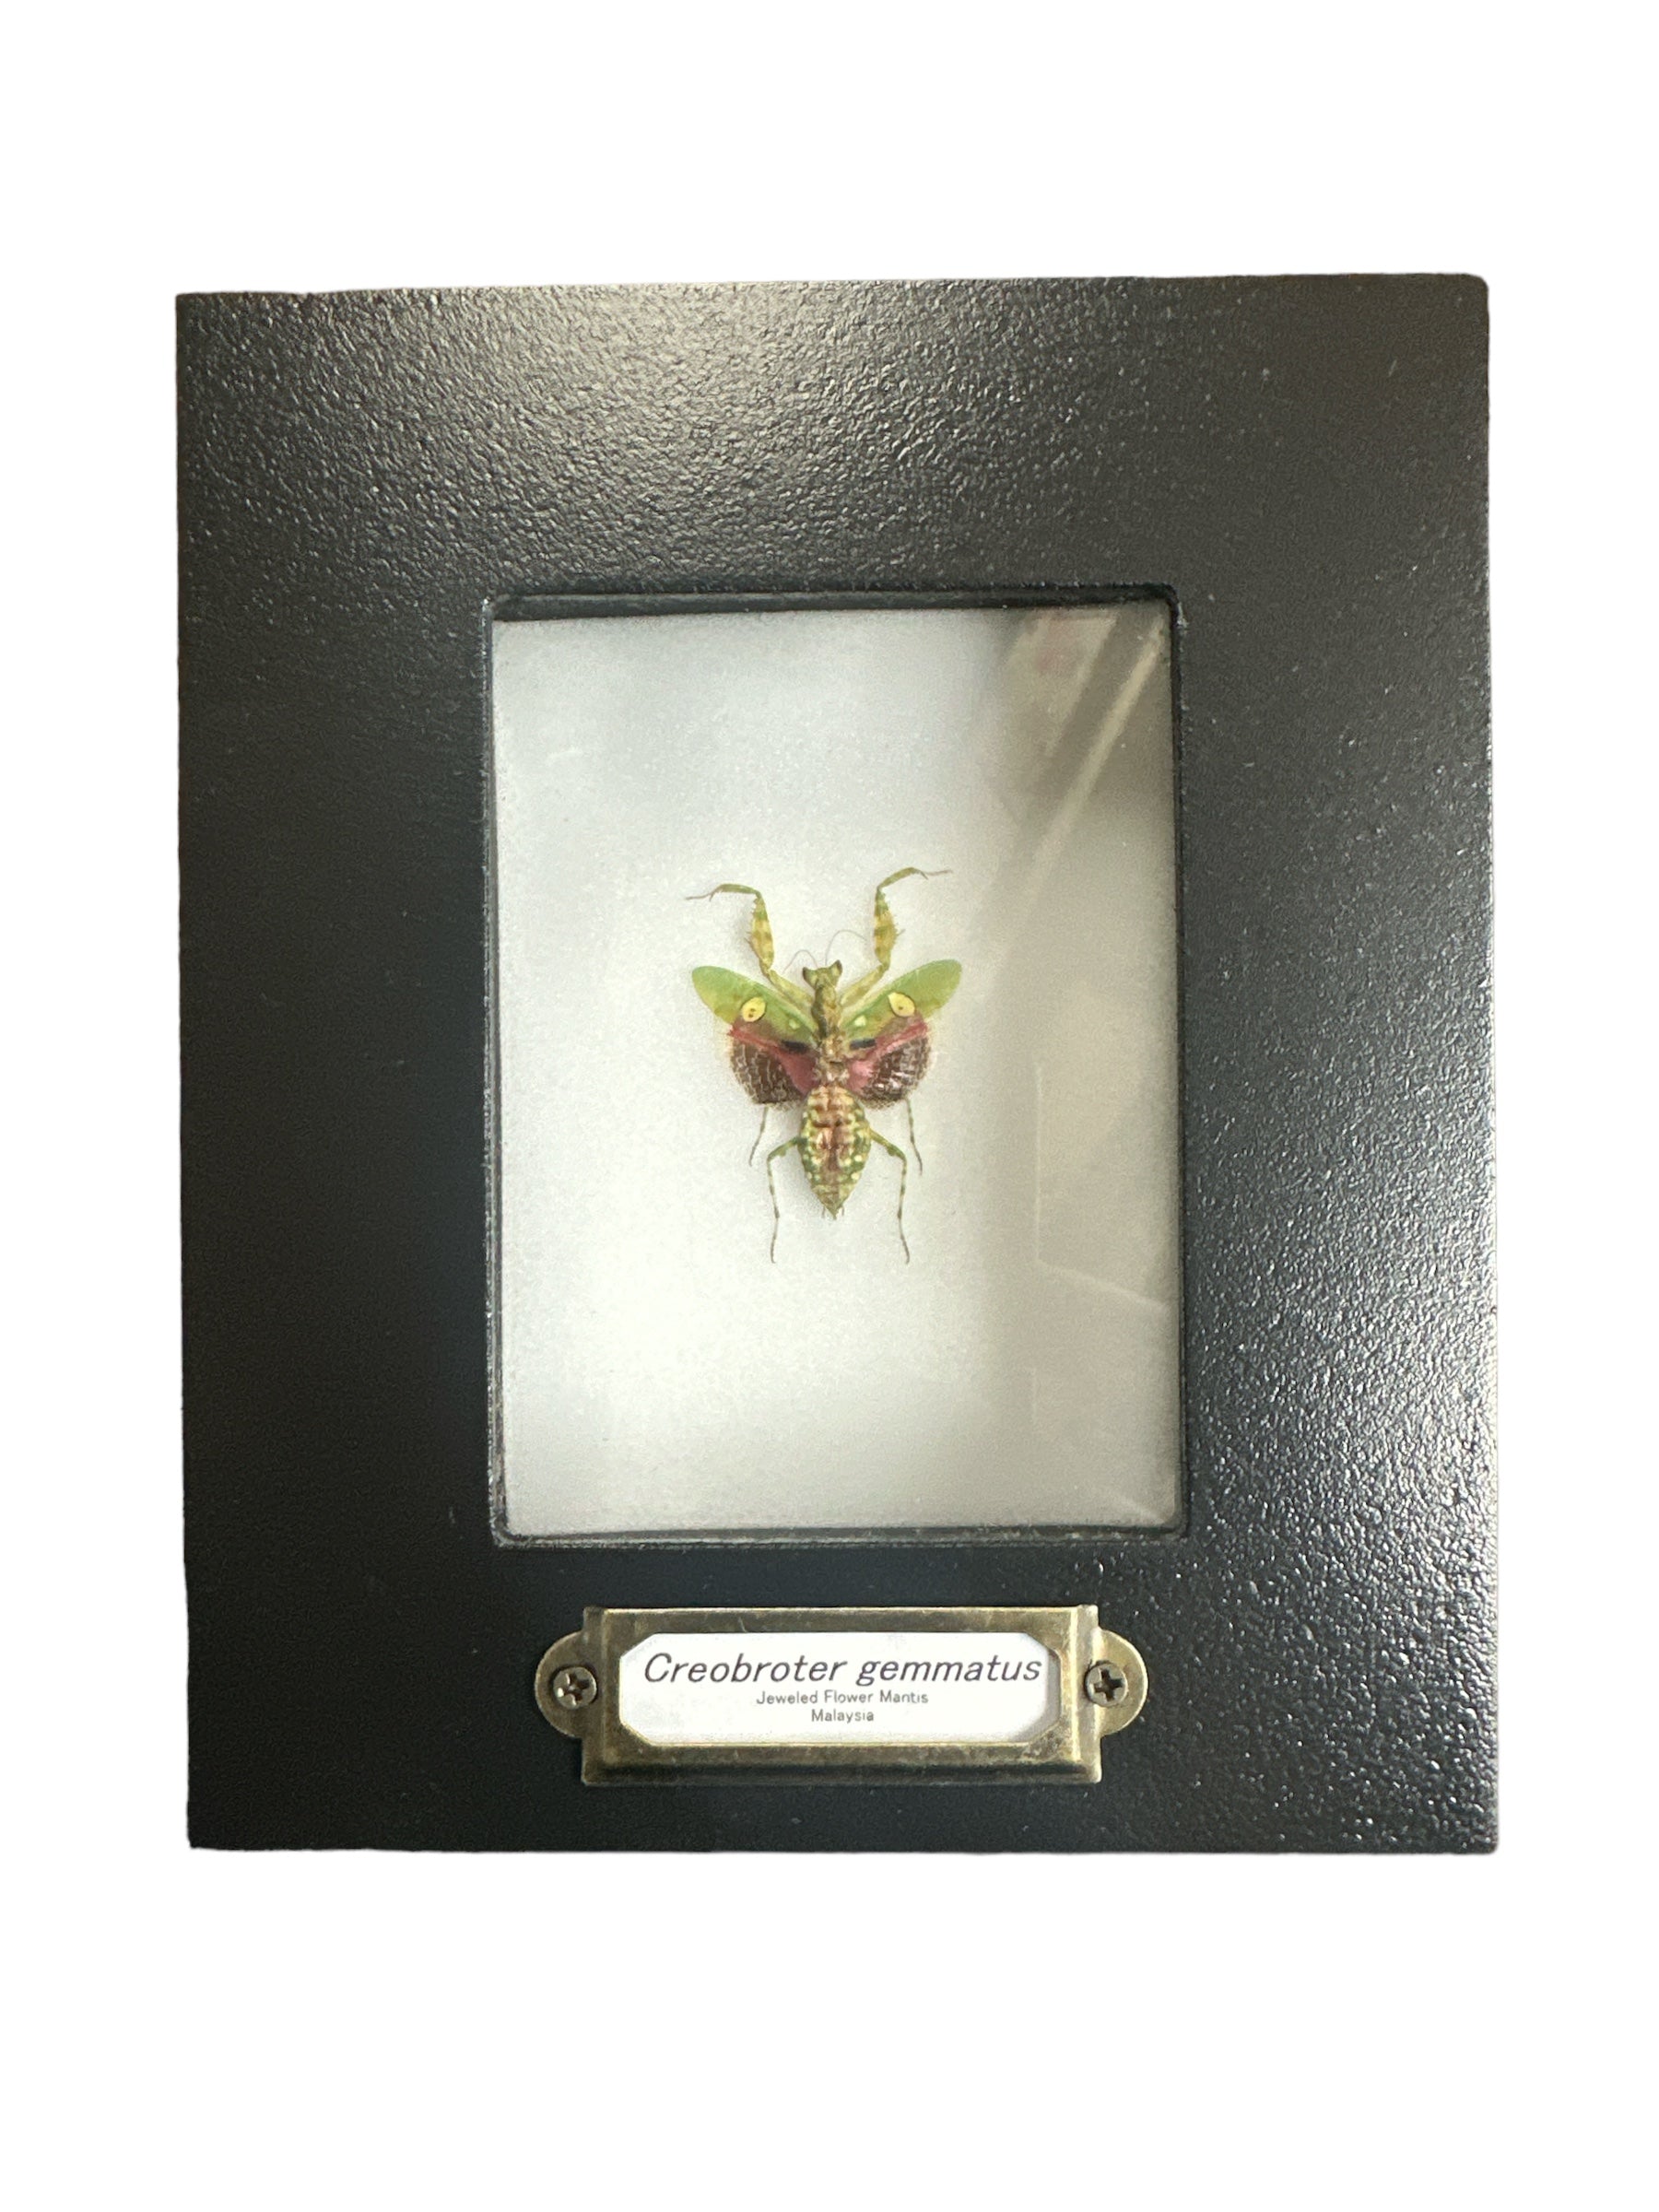 Jeweled Flower Mantid (Creobroter gemmatus) - 2x3" Frame